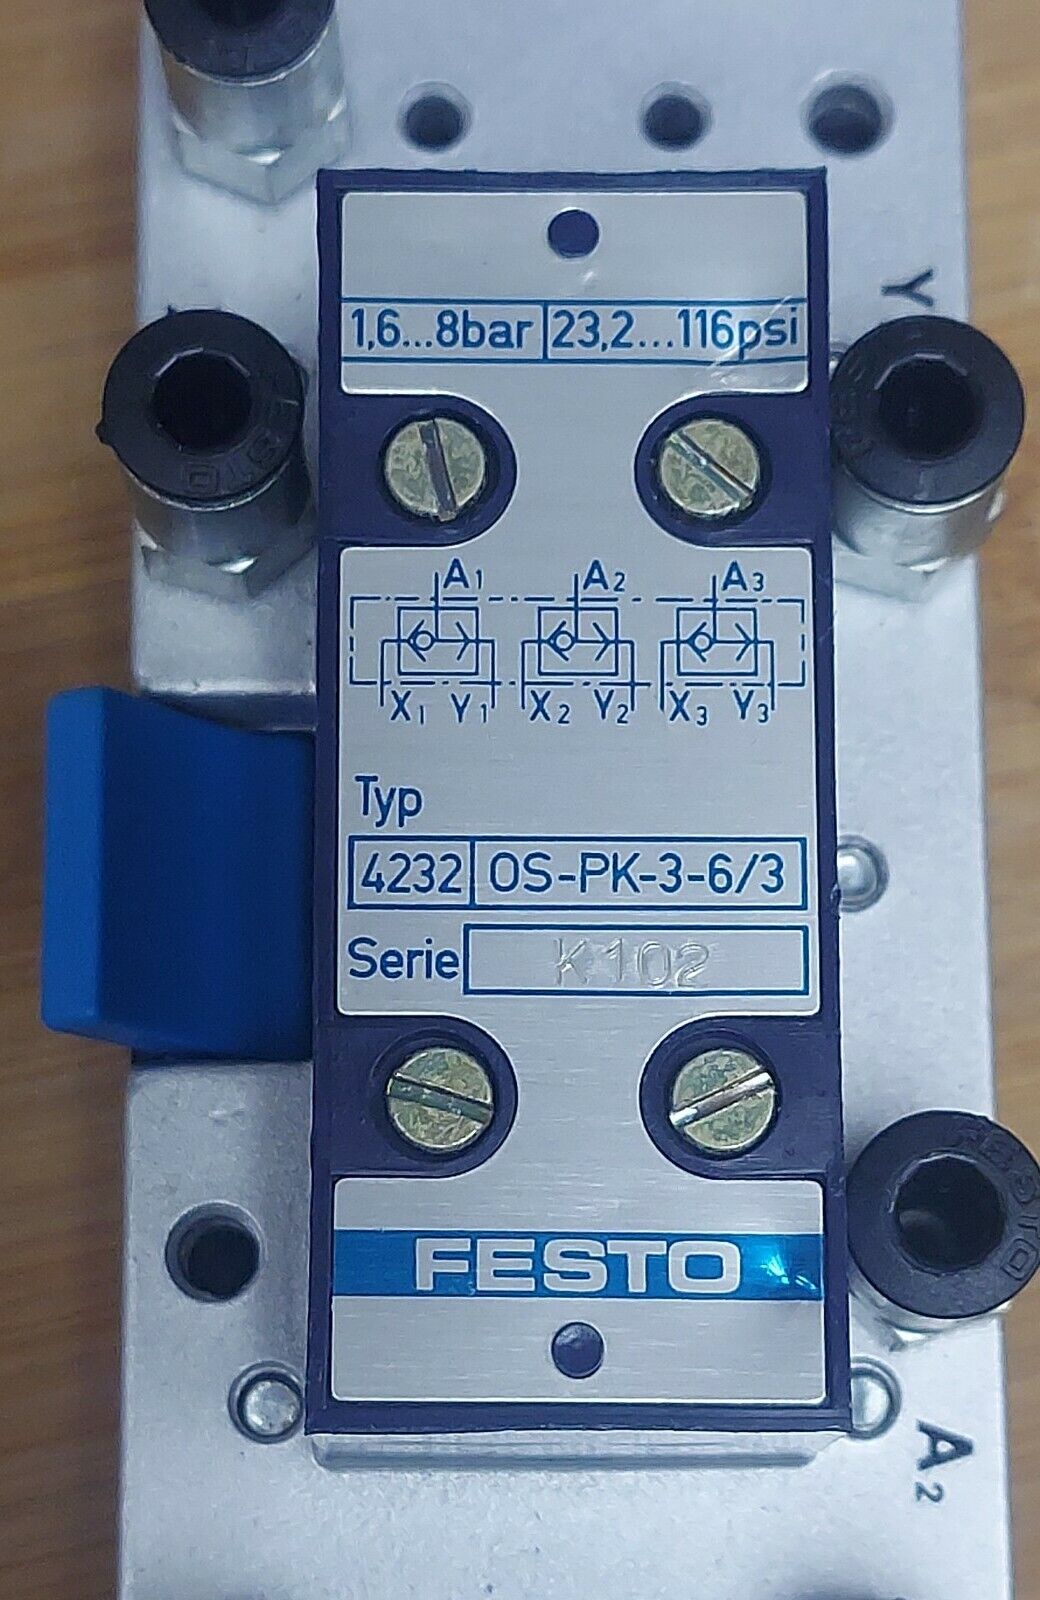 Festo 4232 0S-PK-3-6/3 Valve with Base 152882 D.S-PPV-0S-6/3 (BL122) - 0